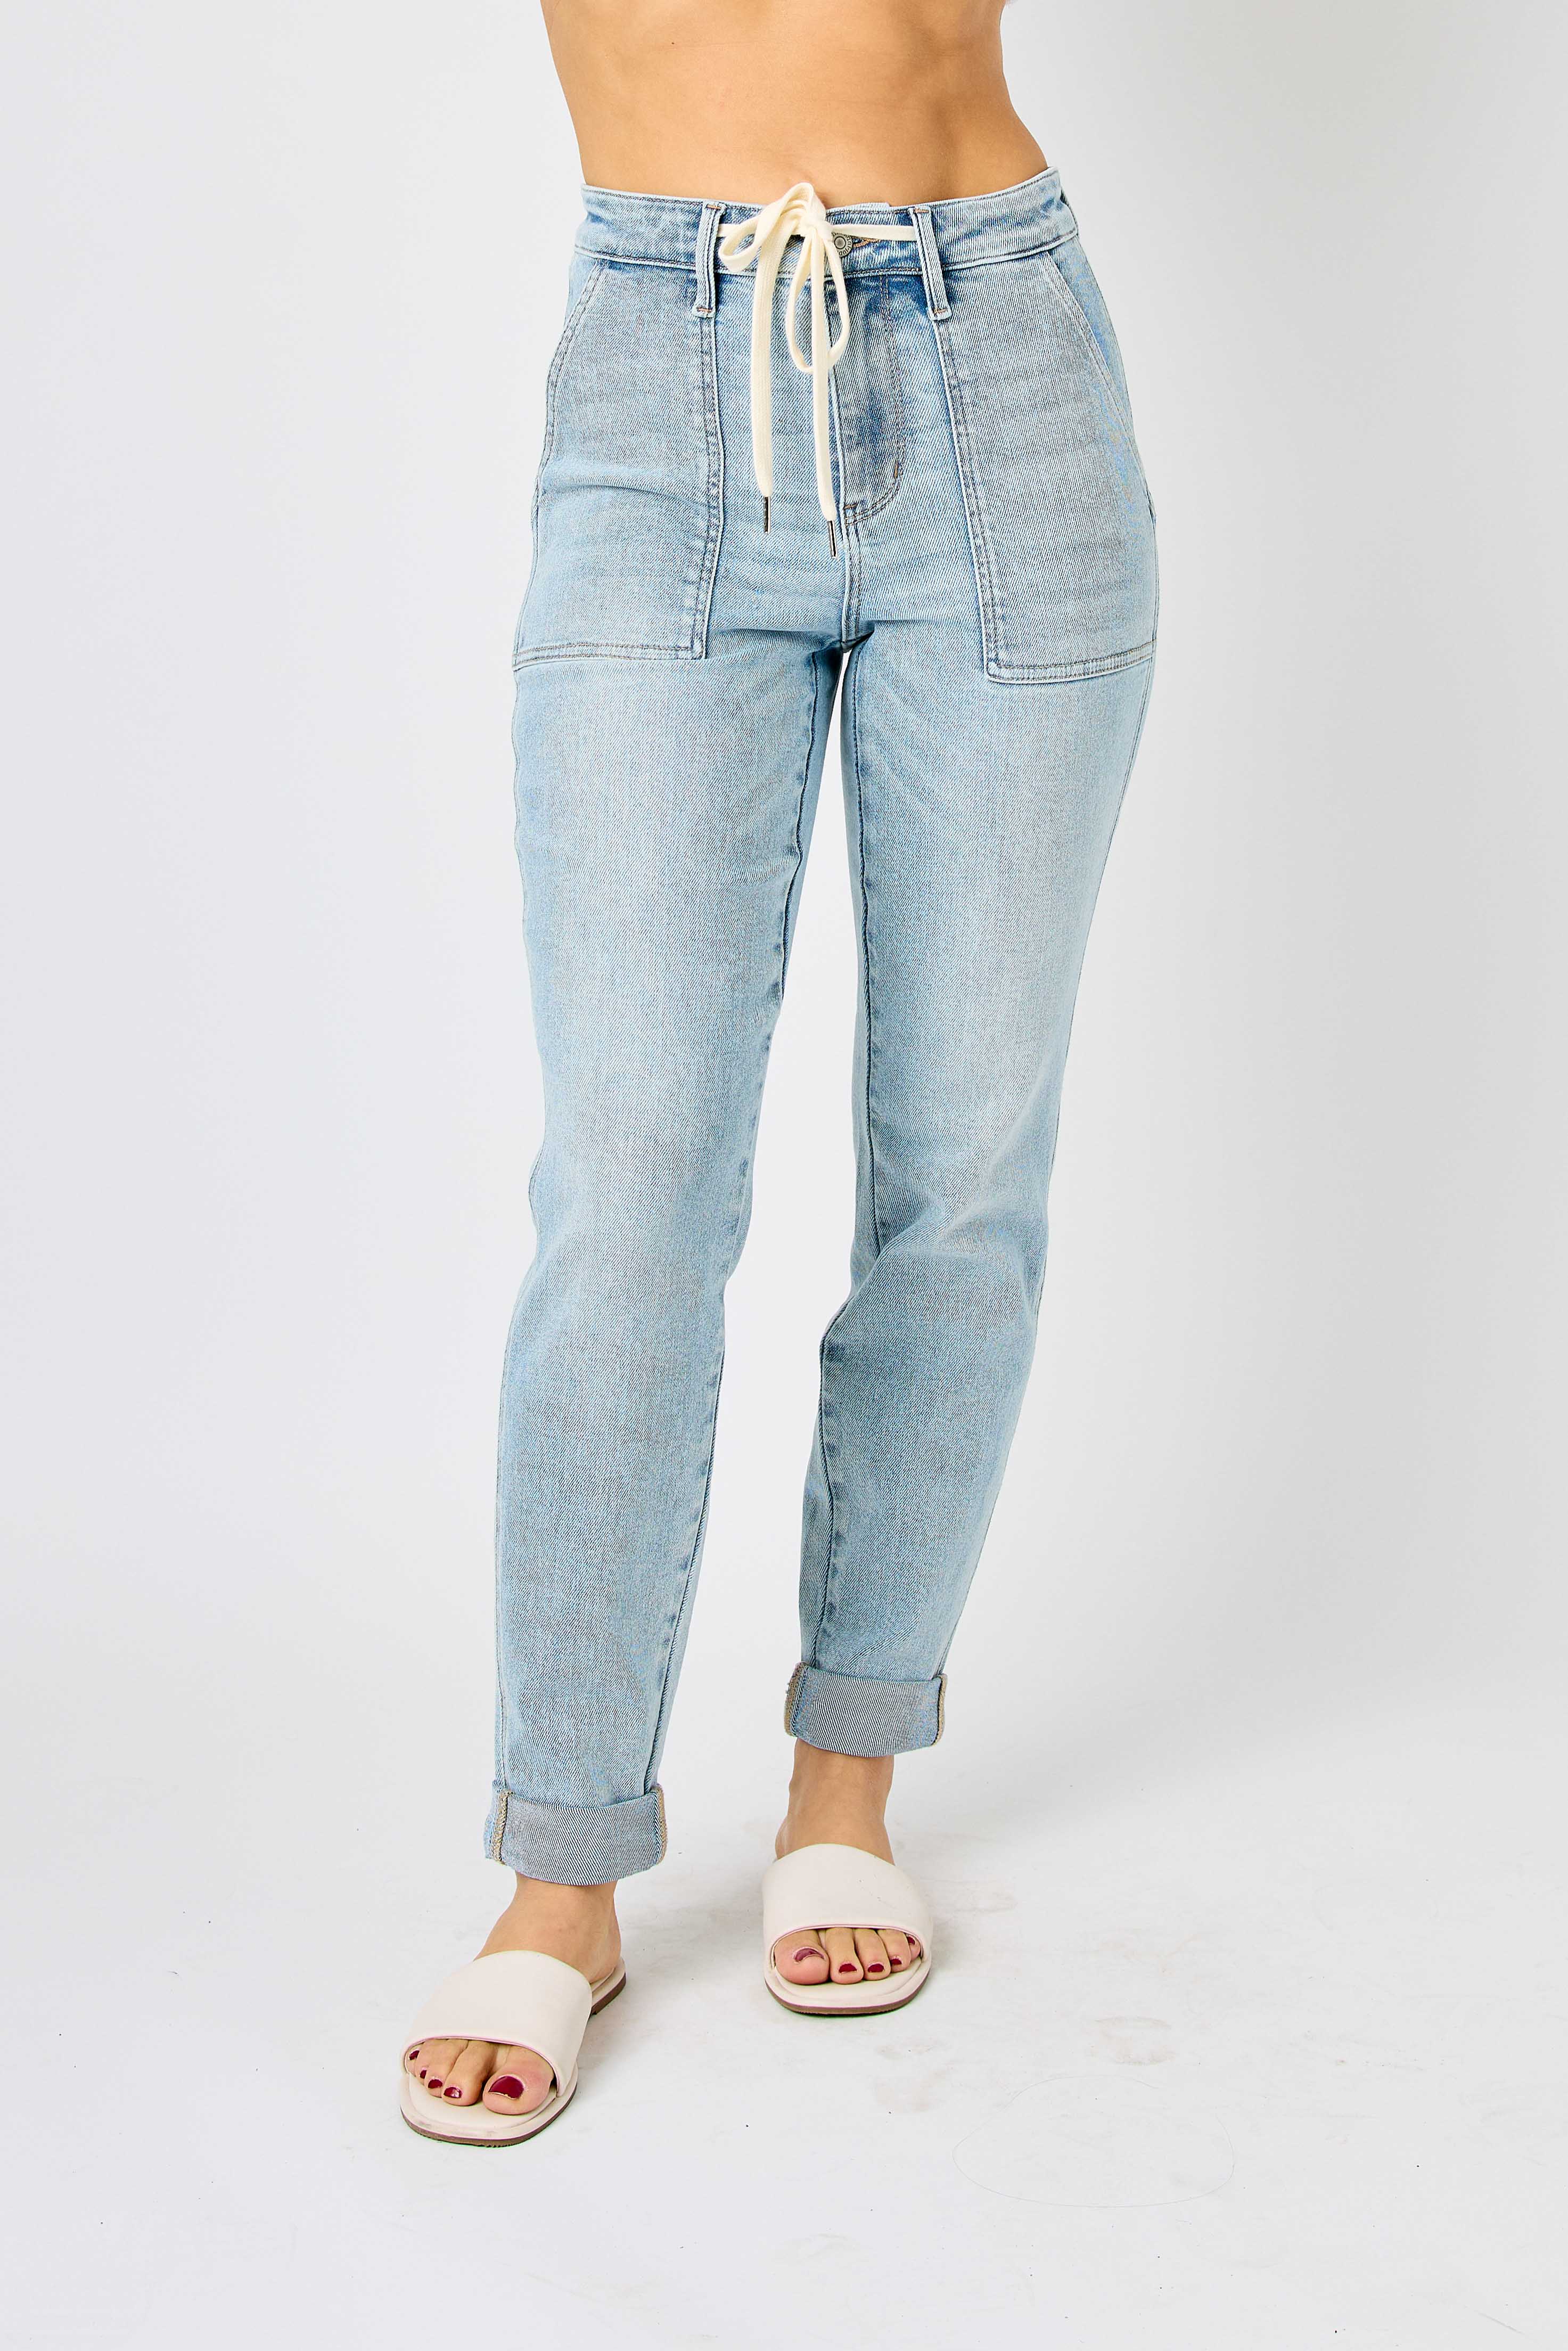 Vintage Cuffed Jogger Judy Blue Denim Jeans